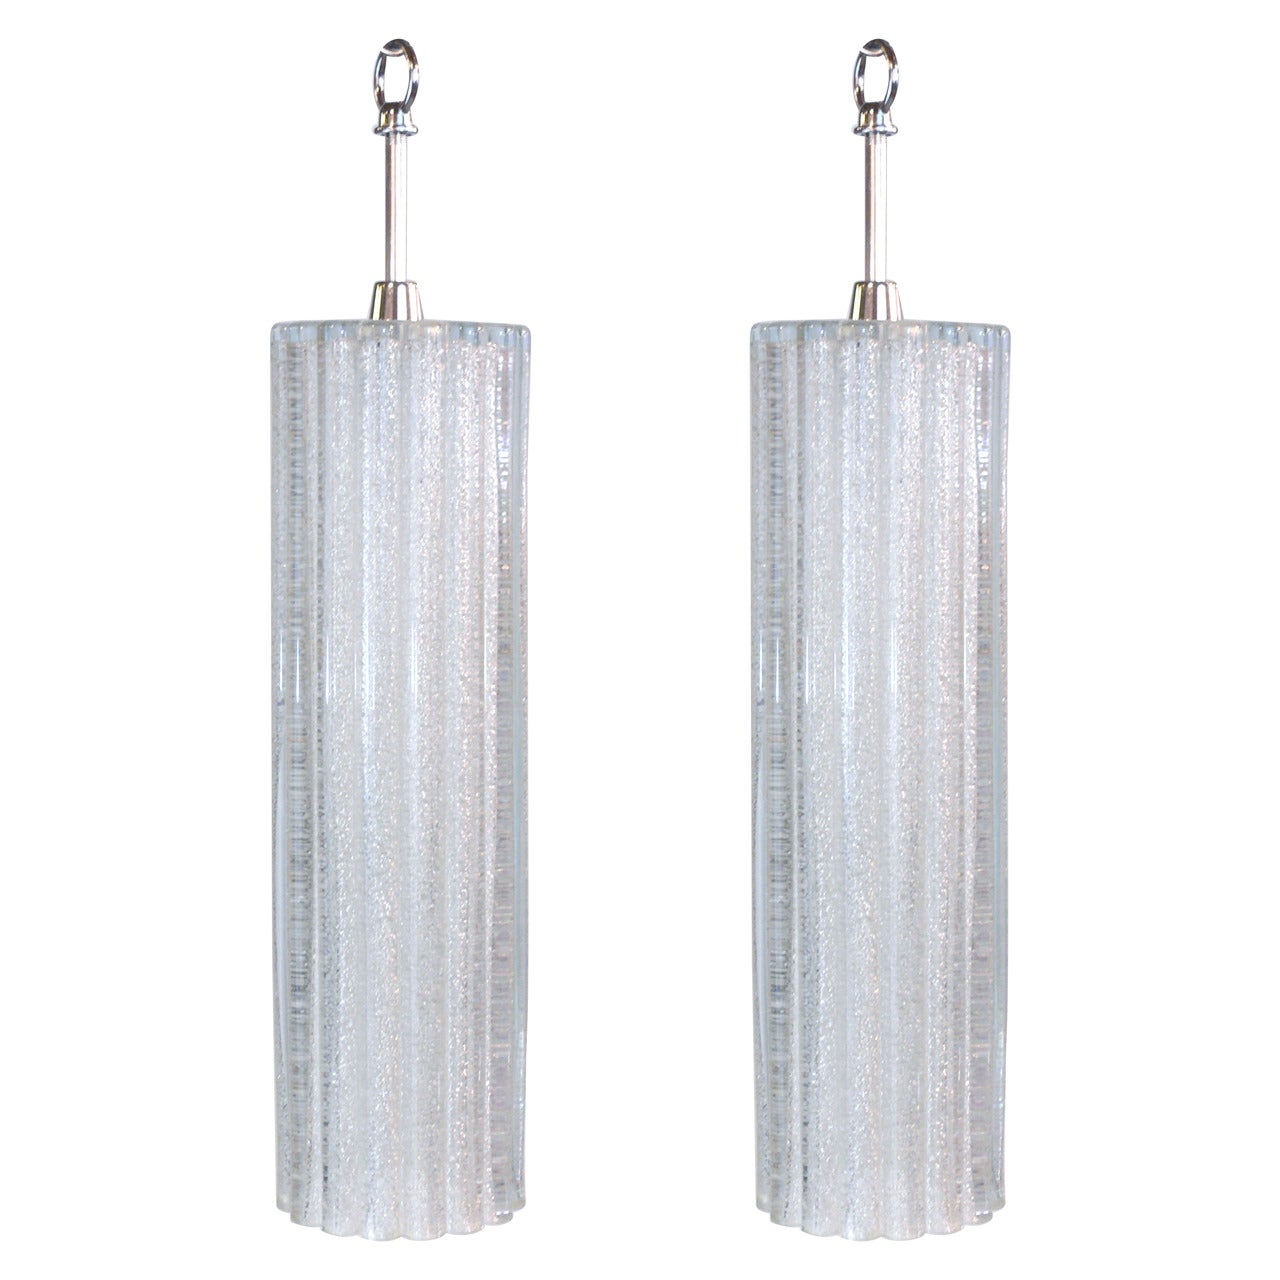 Pair of Scalloped Glass Pendant Lights